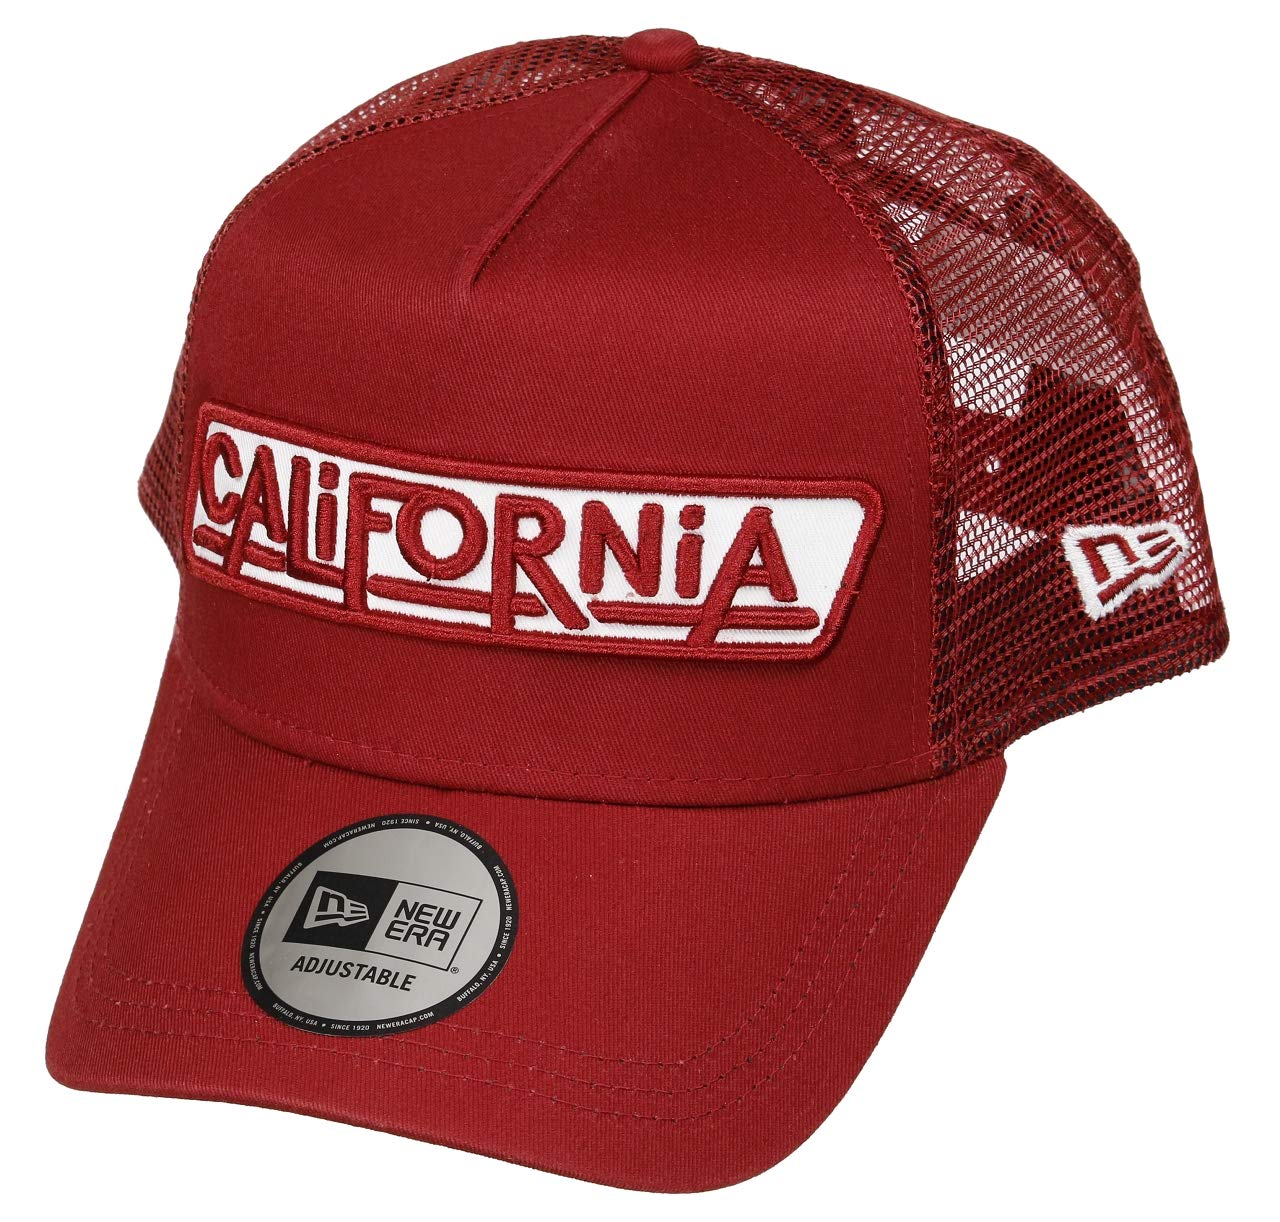 New Era Adjustable A-Frame Trucker Cap - USA California